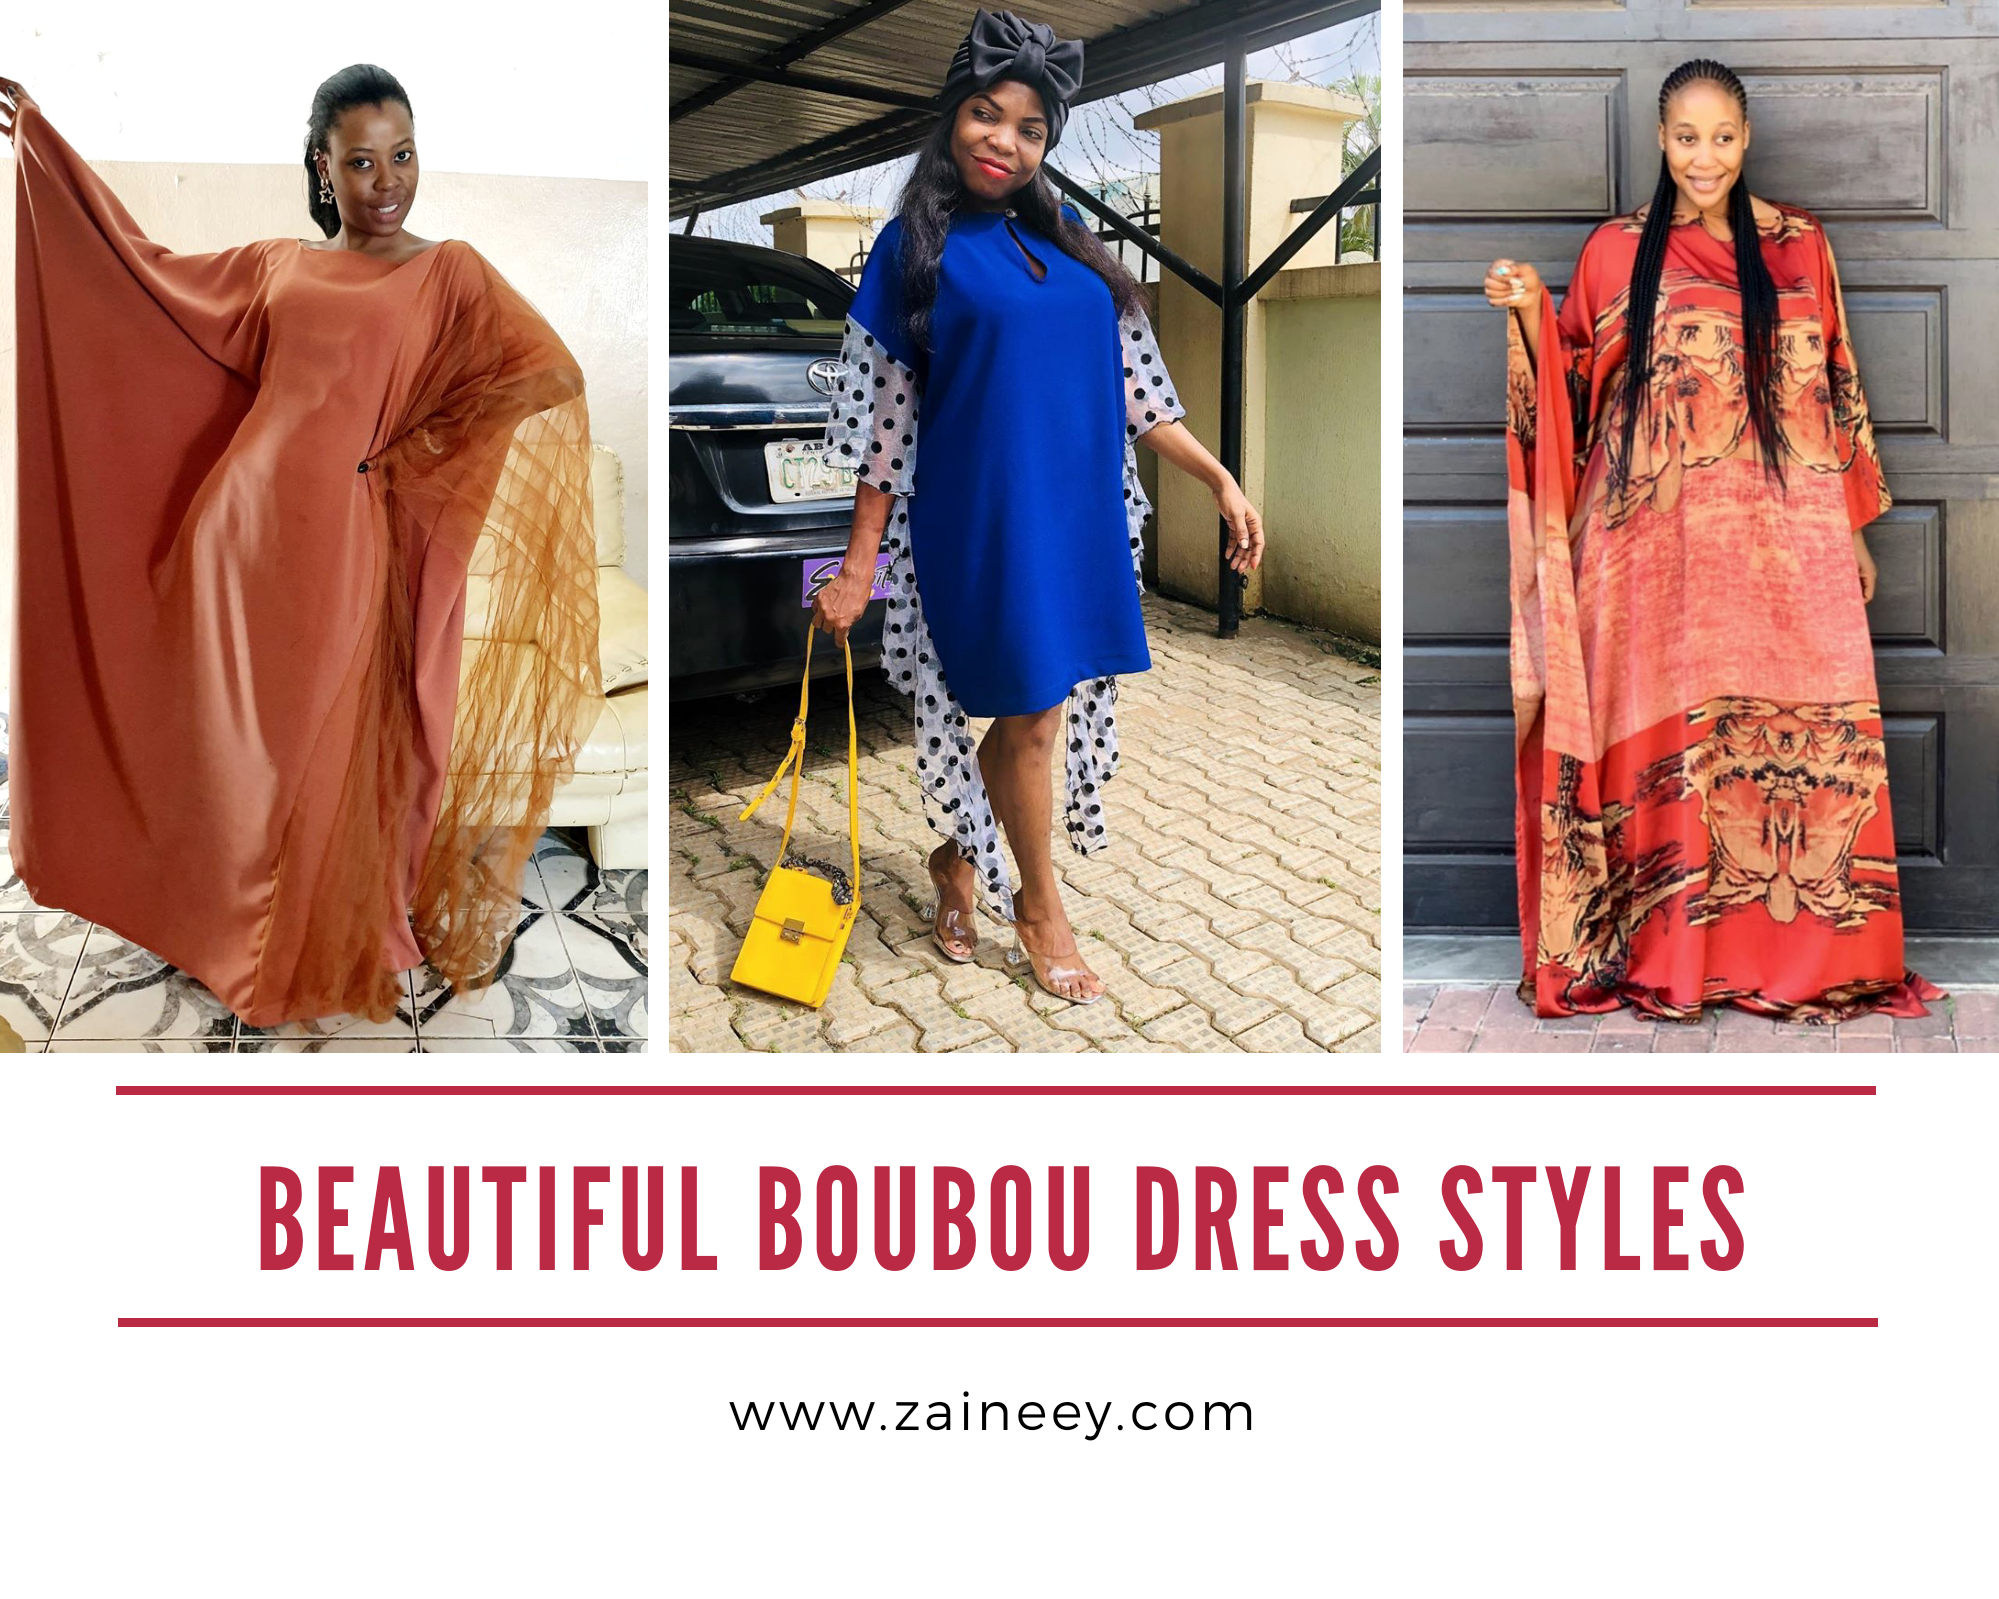 Stylish, Chic and Beautiful Boubou Dress Styles for Fashionable Ladies